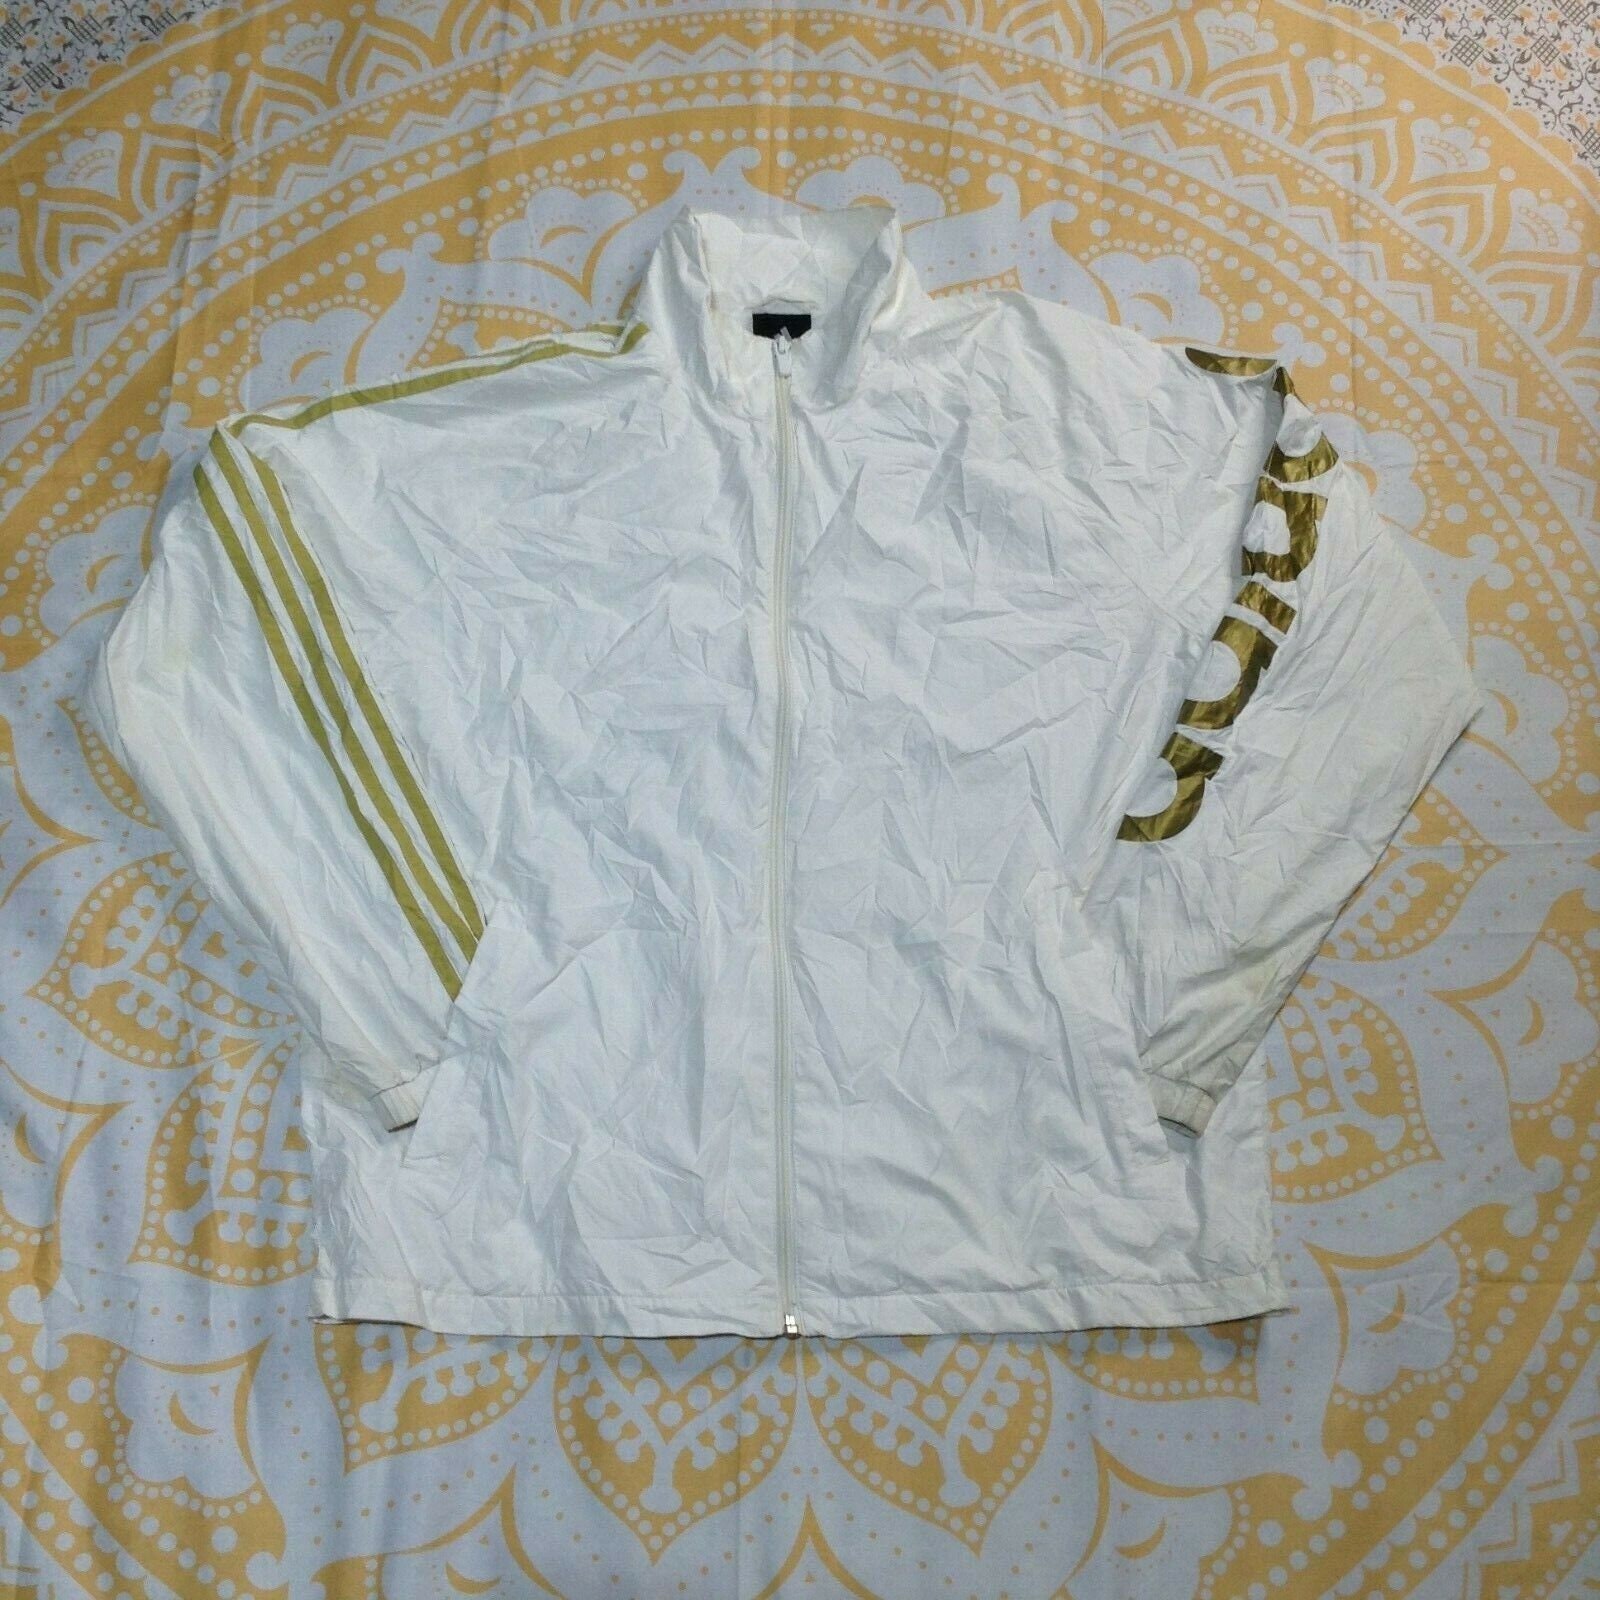 levering aan huis Dosering Handelsmerk Adidas Windbreaker Jacket White Gold Stripes Retro Full Zip - Etsy